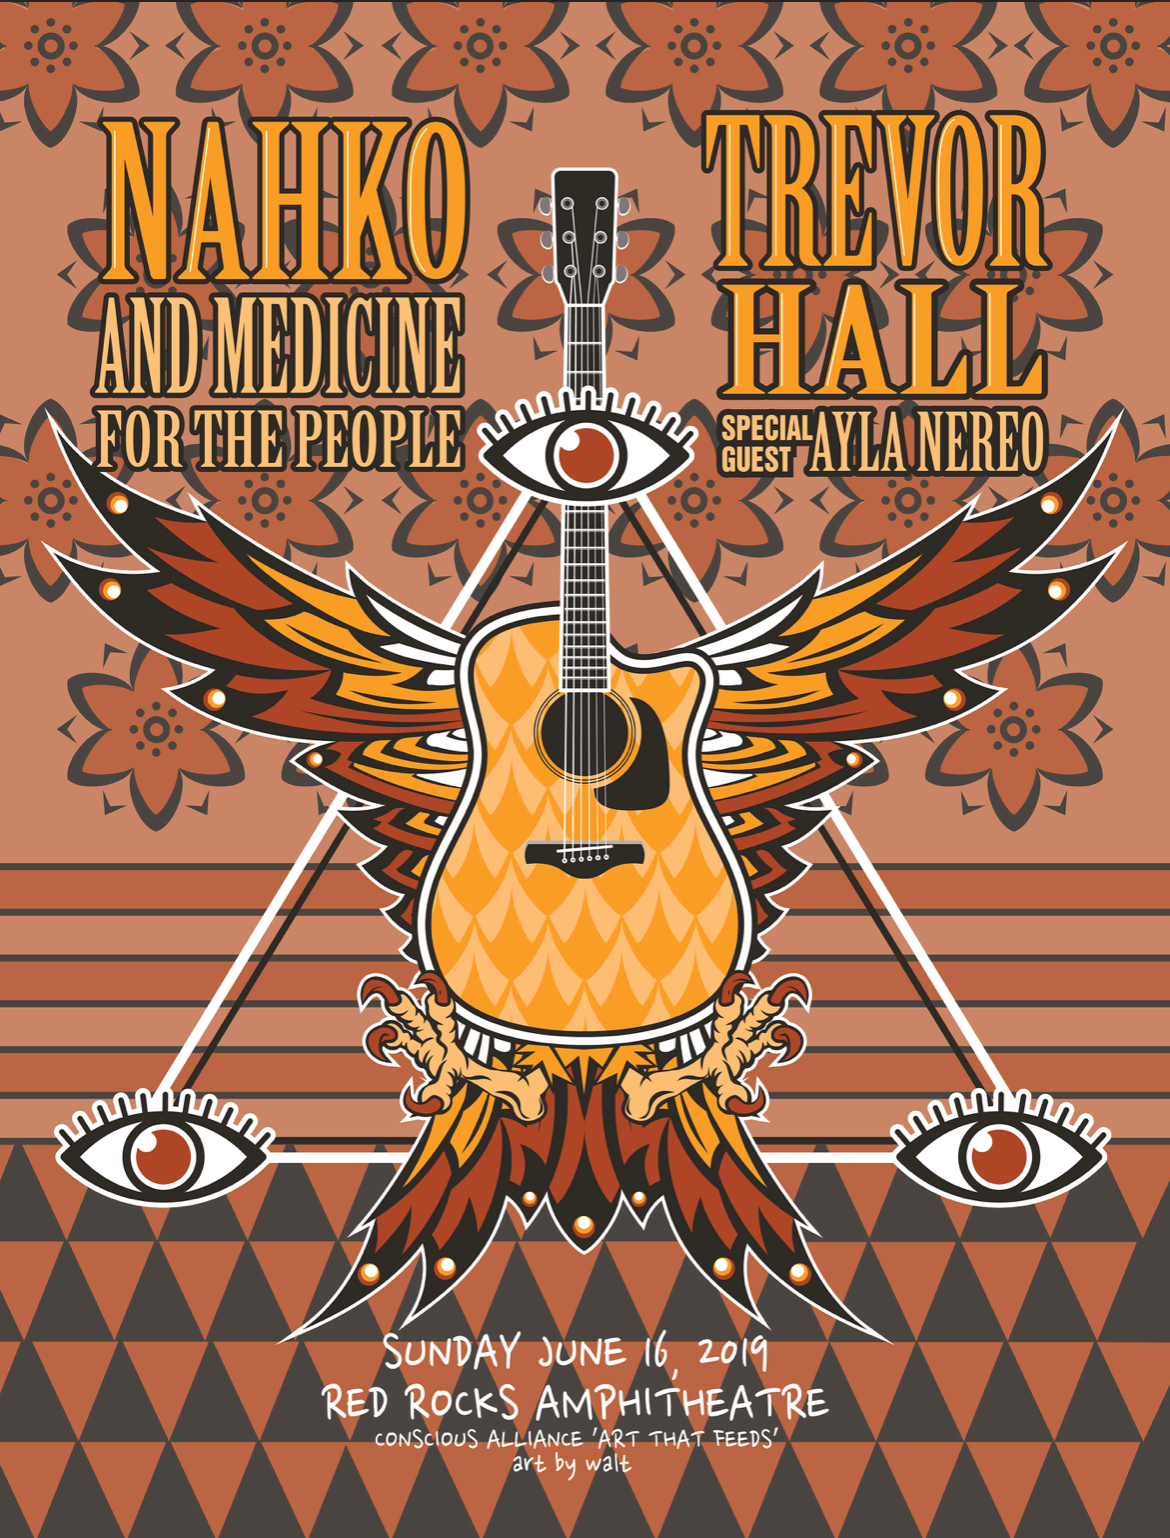 Nahko & Medicine for the People and Trevor Hall